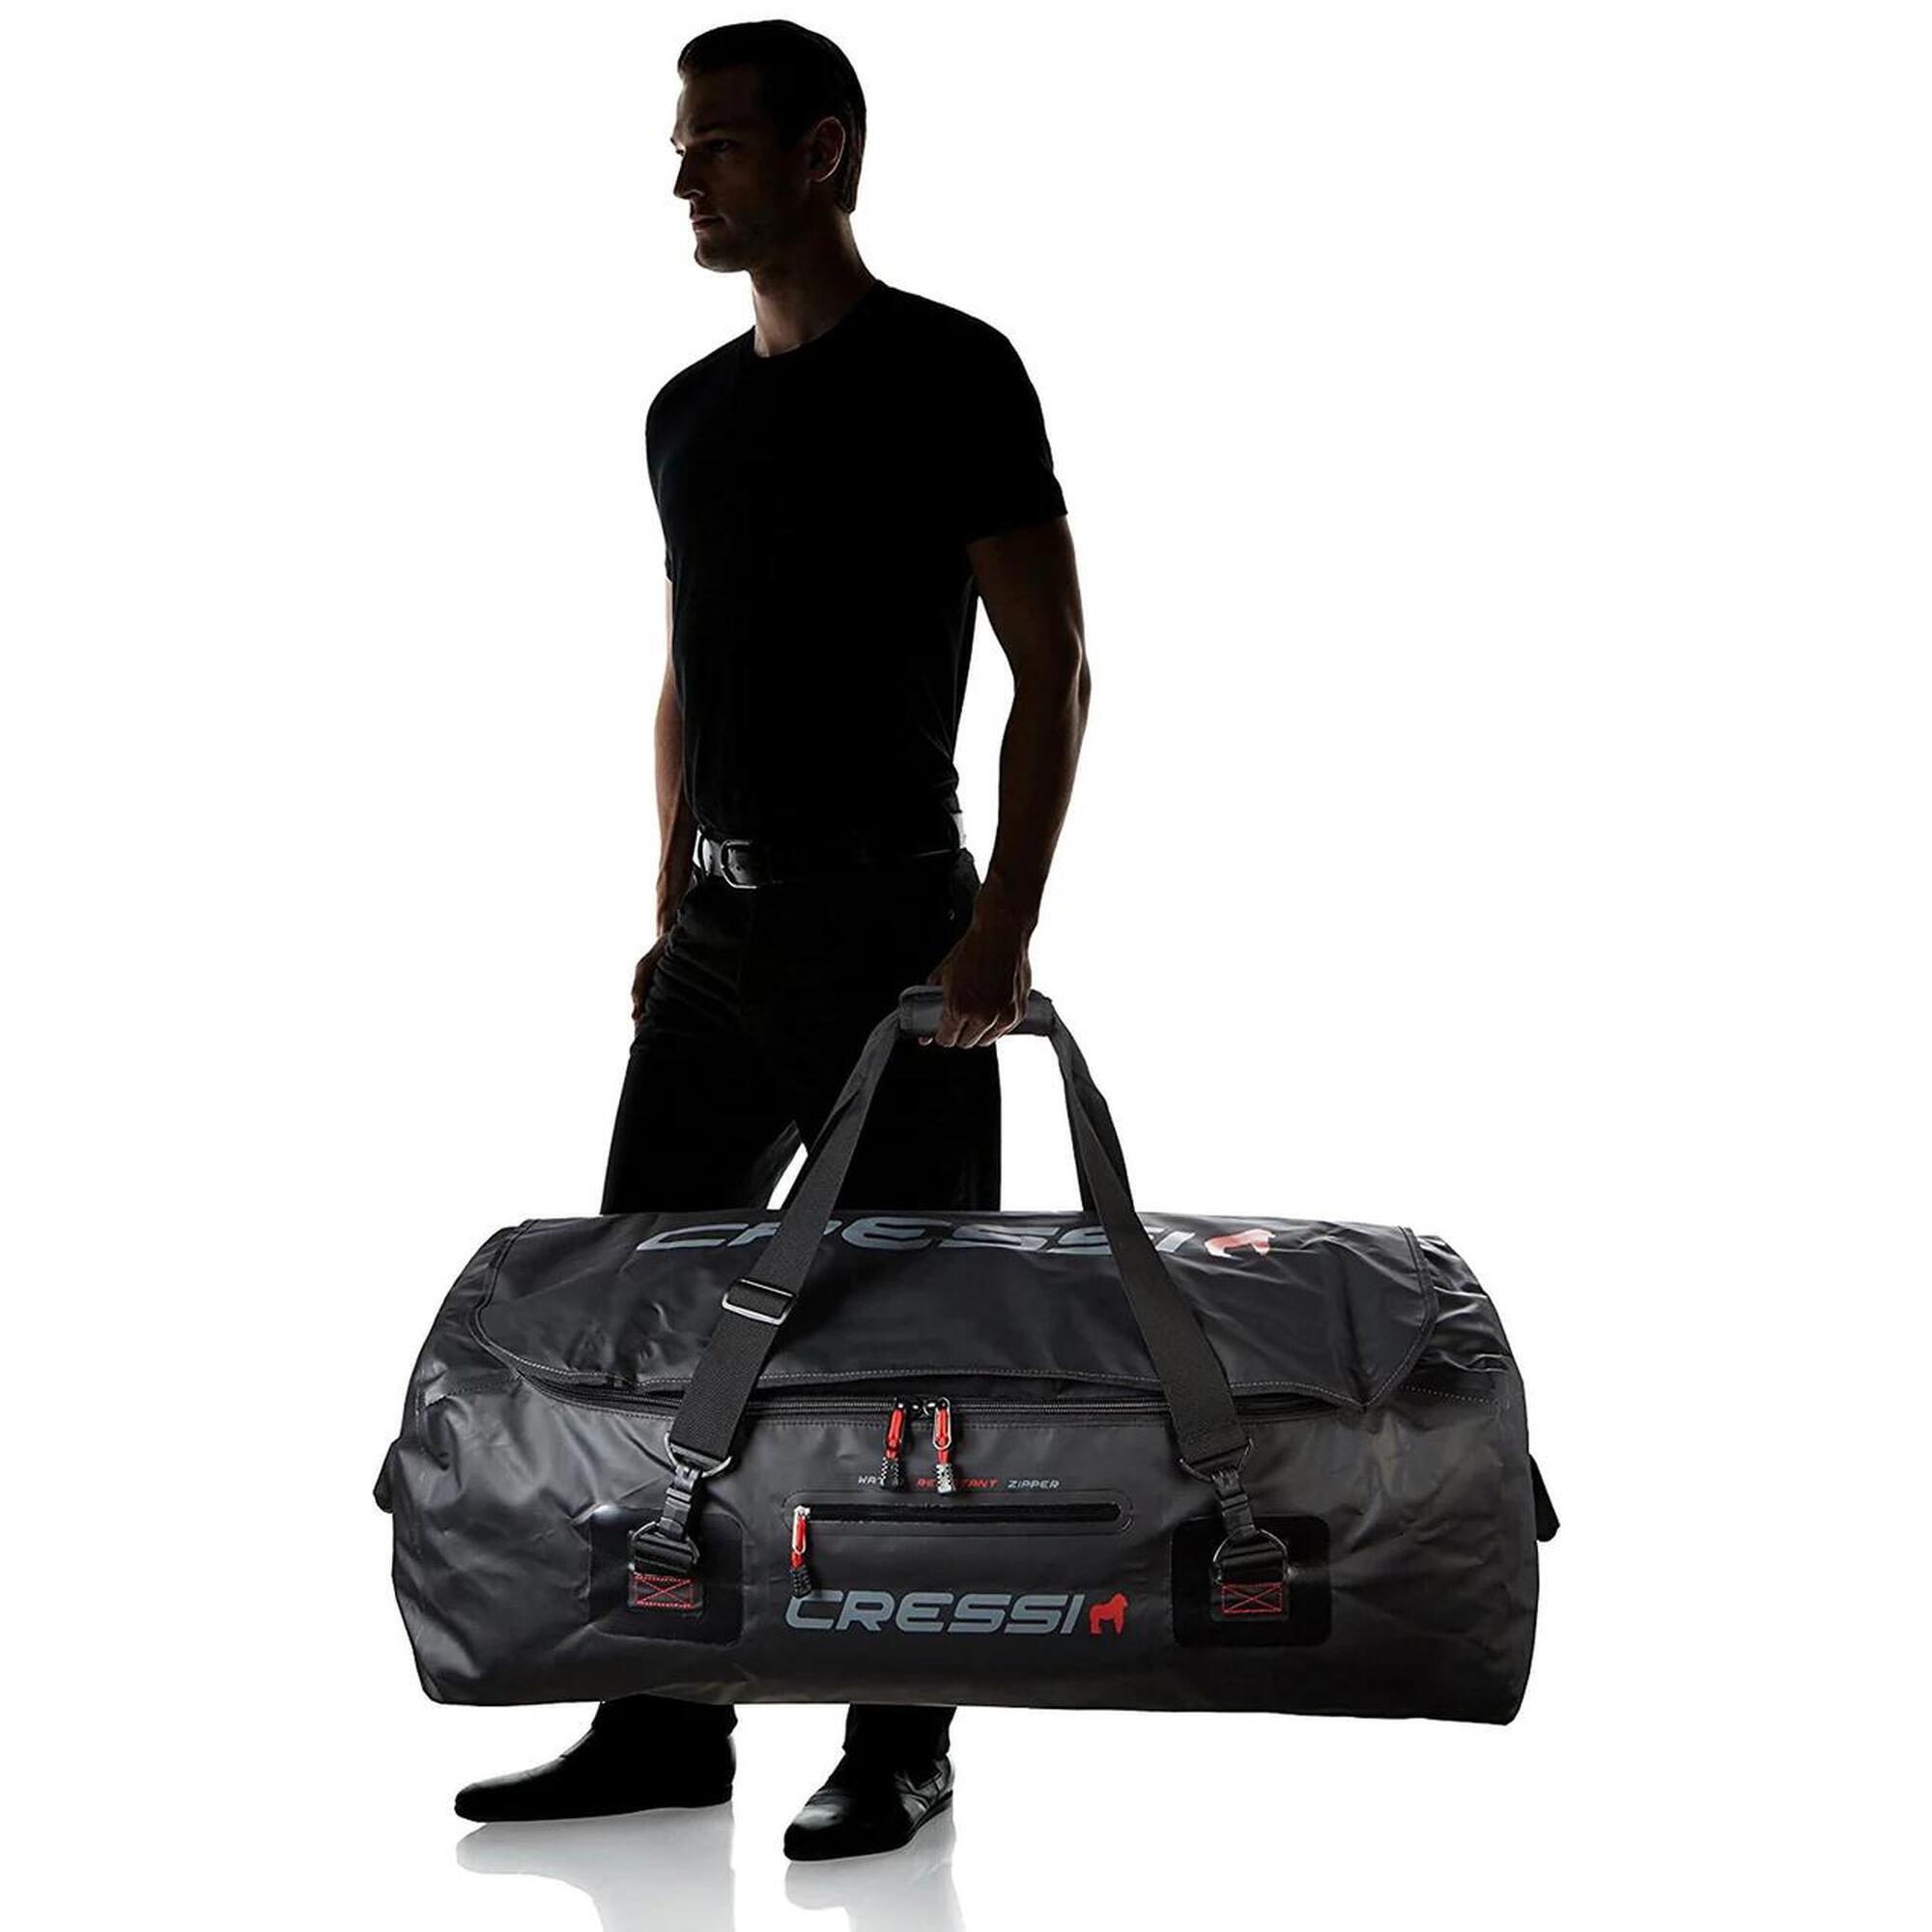 Gorilla Pro Bag Xl Size Dry Bag 135L - Black